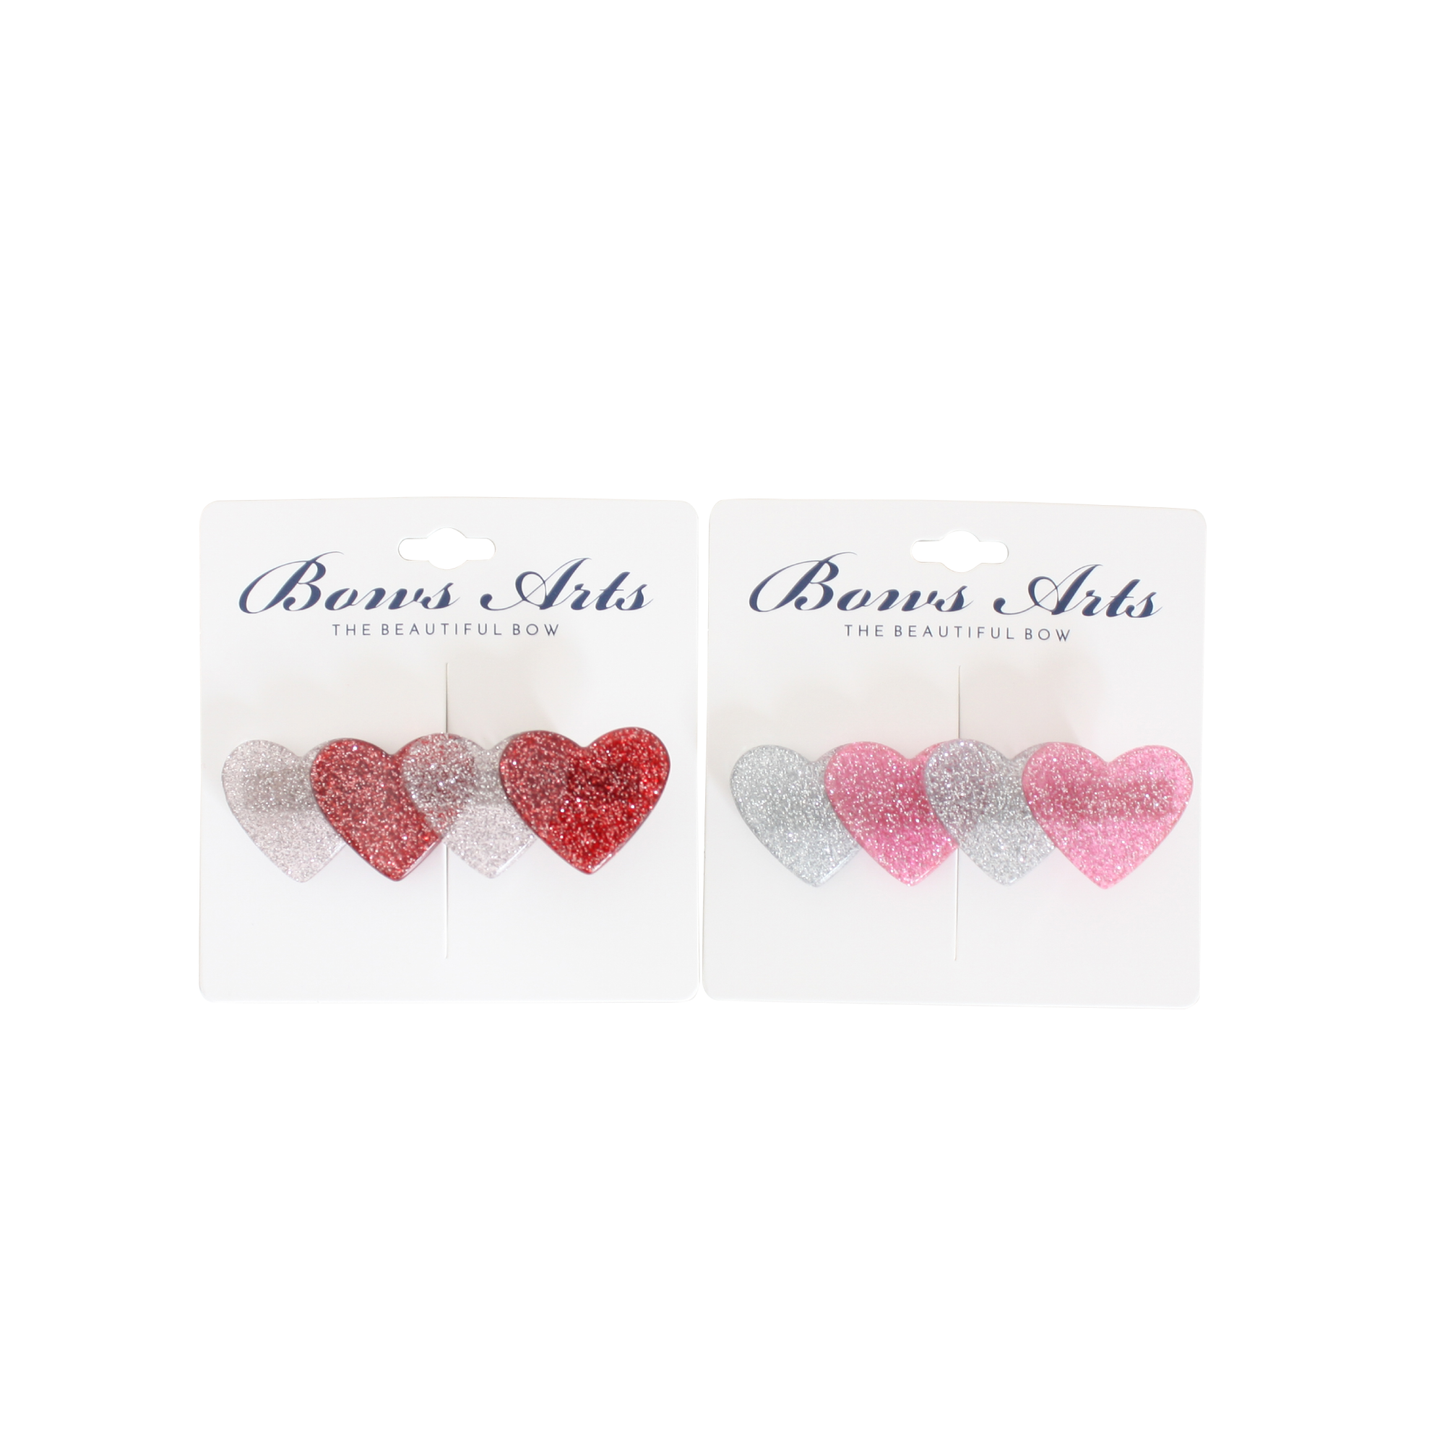 Acrylic Glitter Heart Clips - Pink